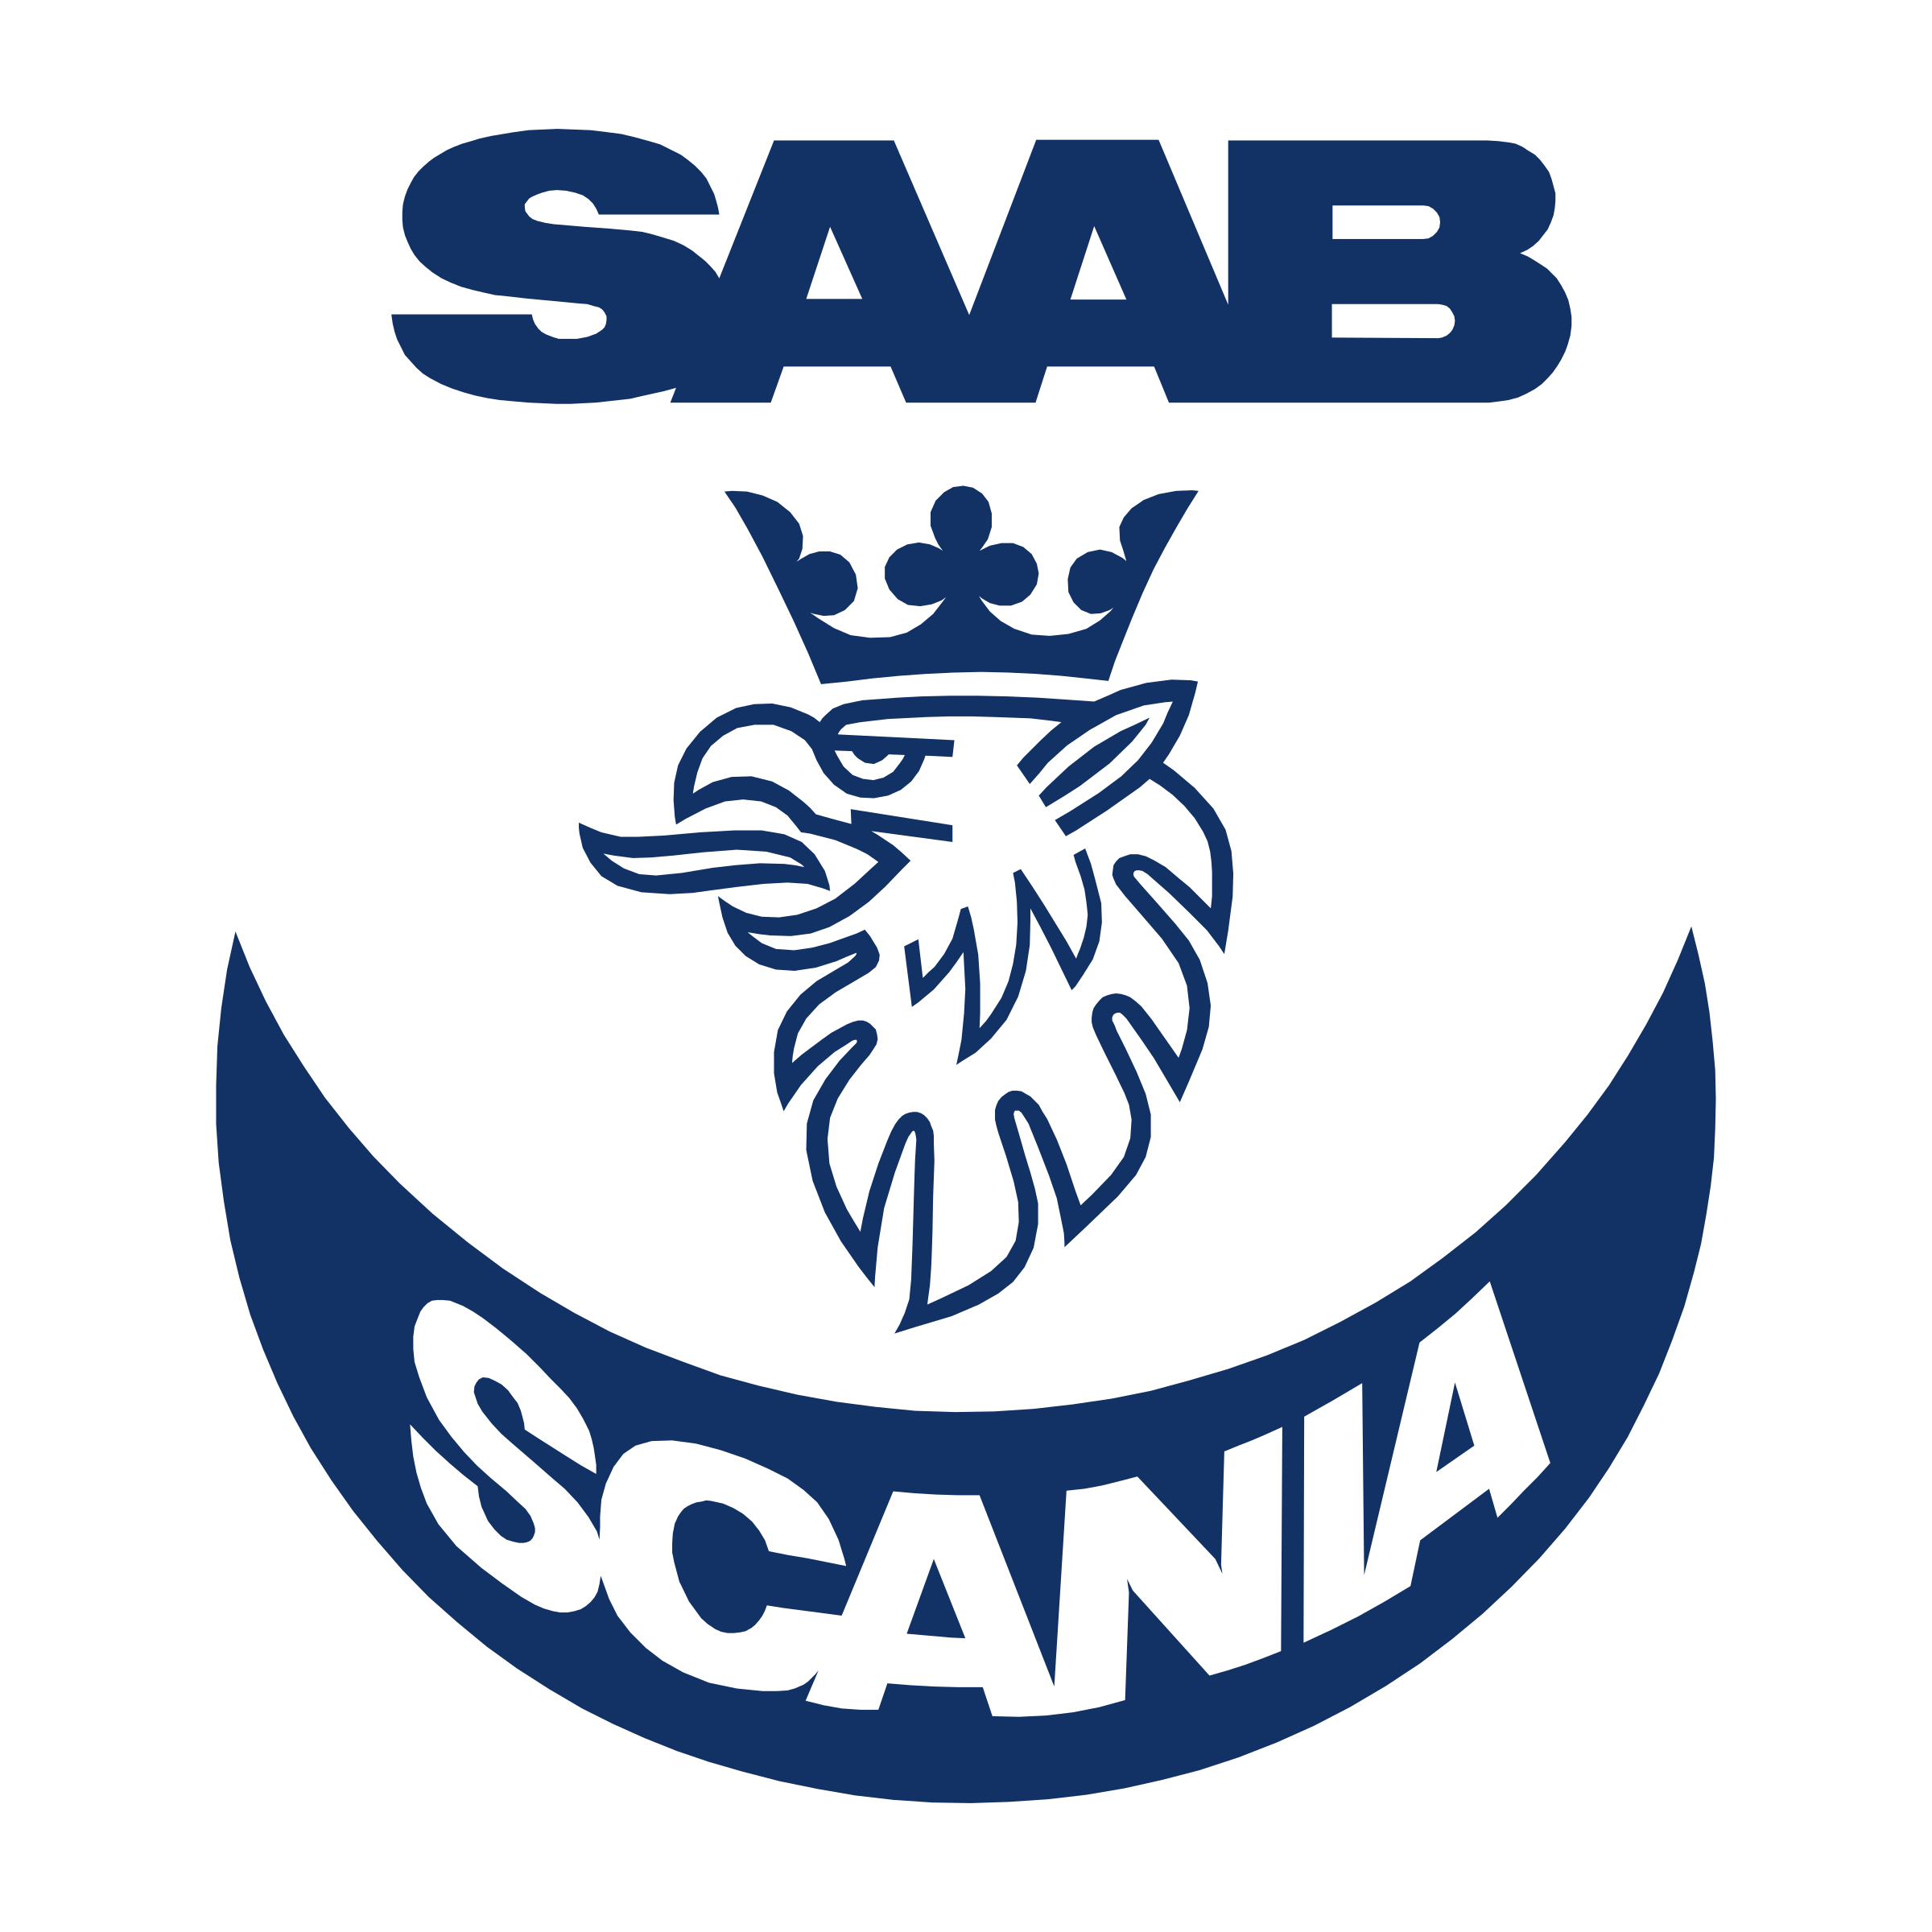 Saab-Scania Logo - SAAB Scania Logo PNG Transparent & SVG Vector